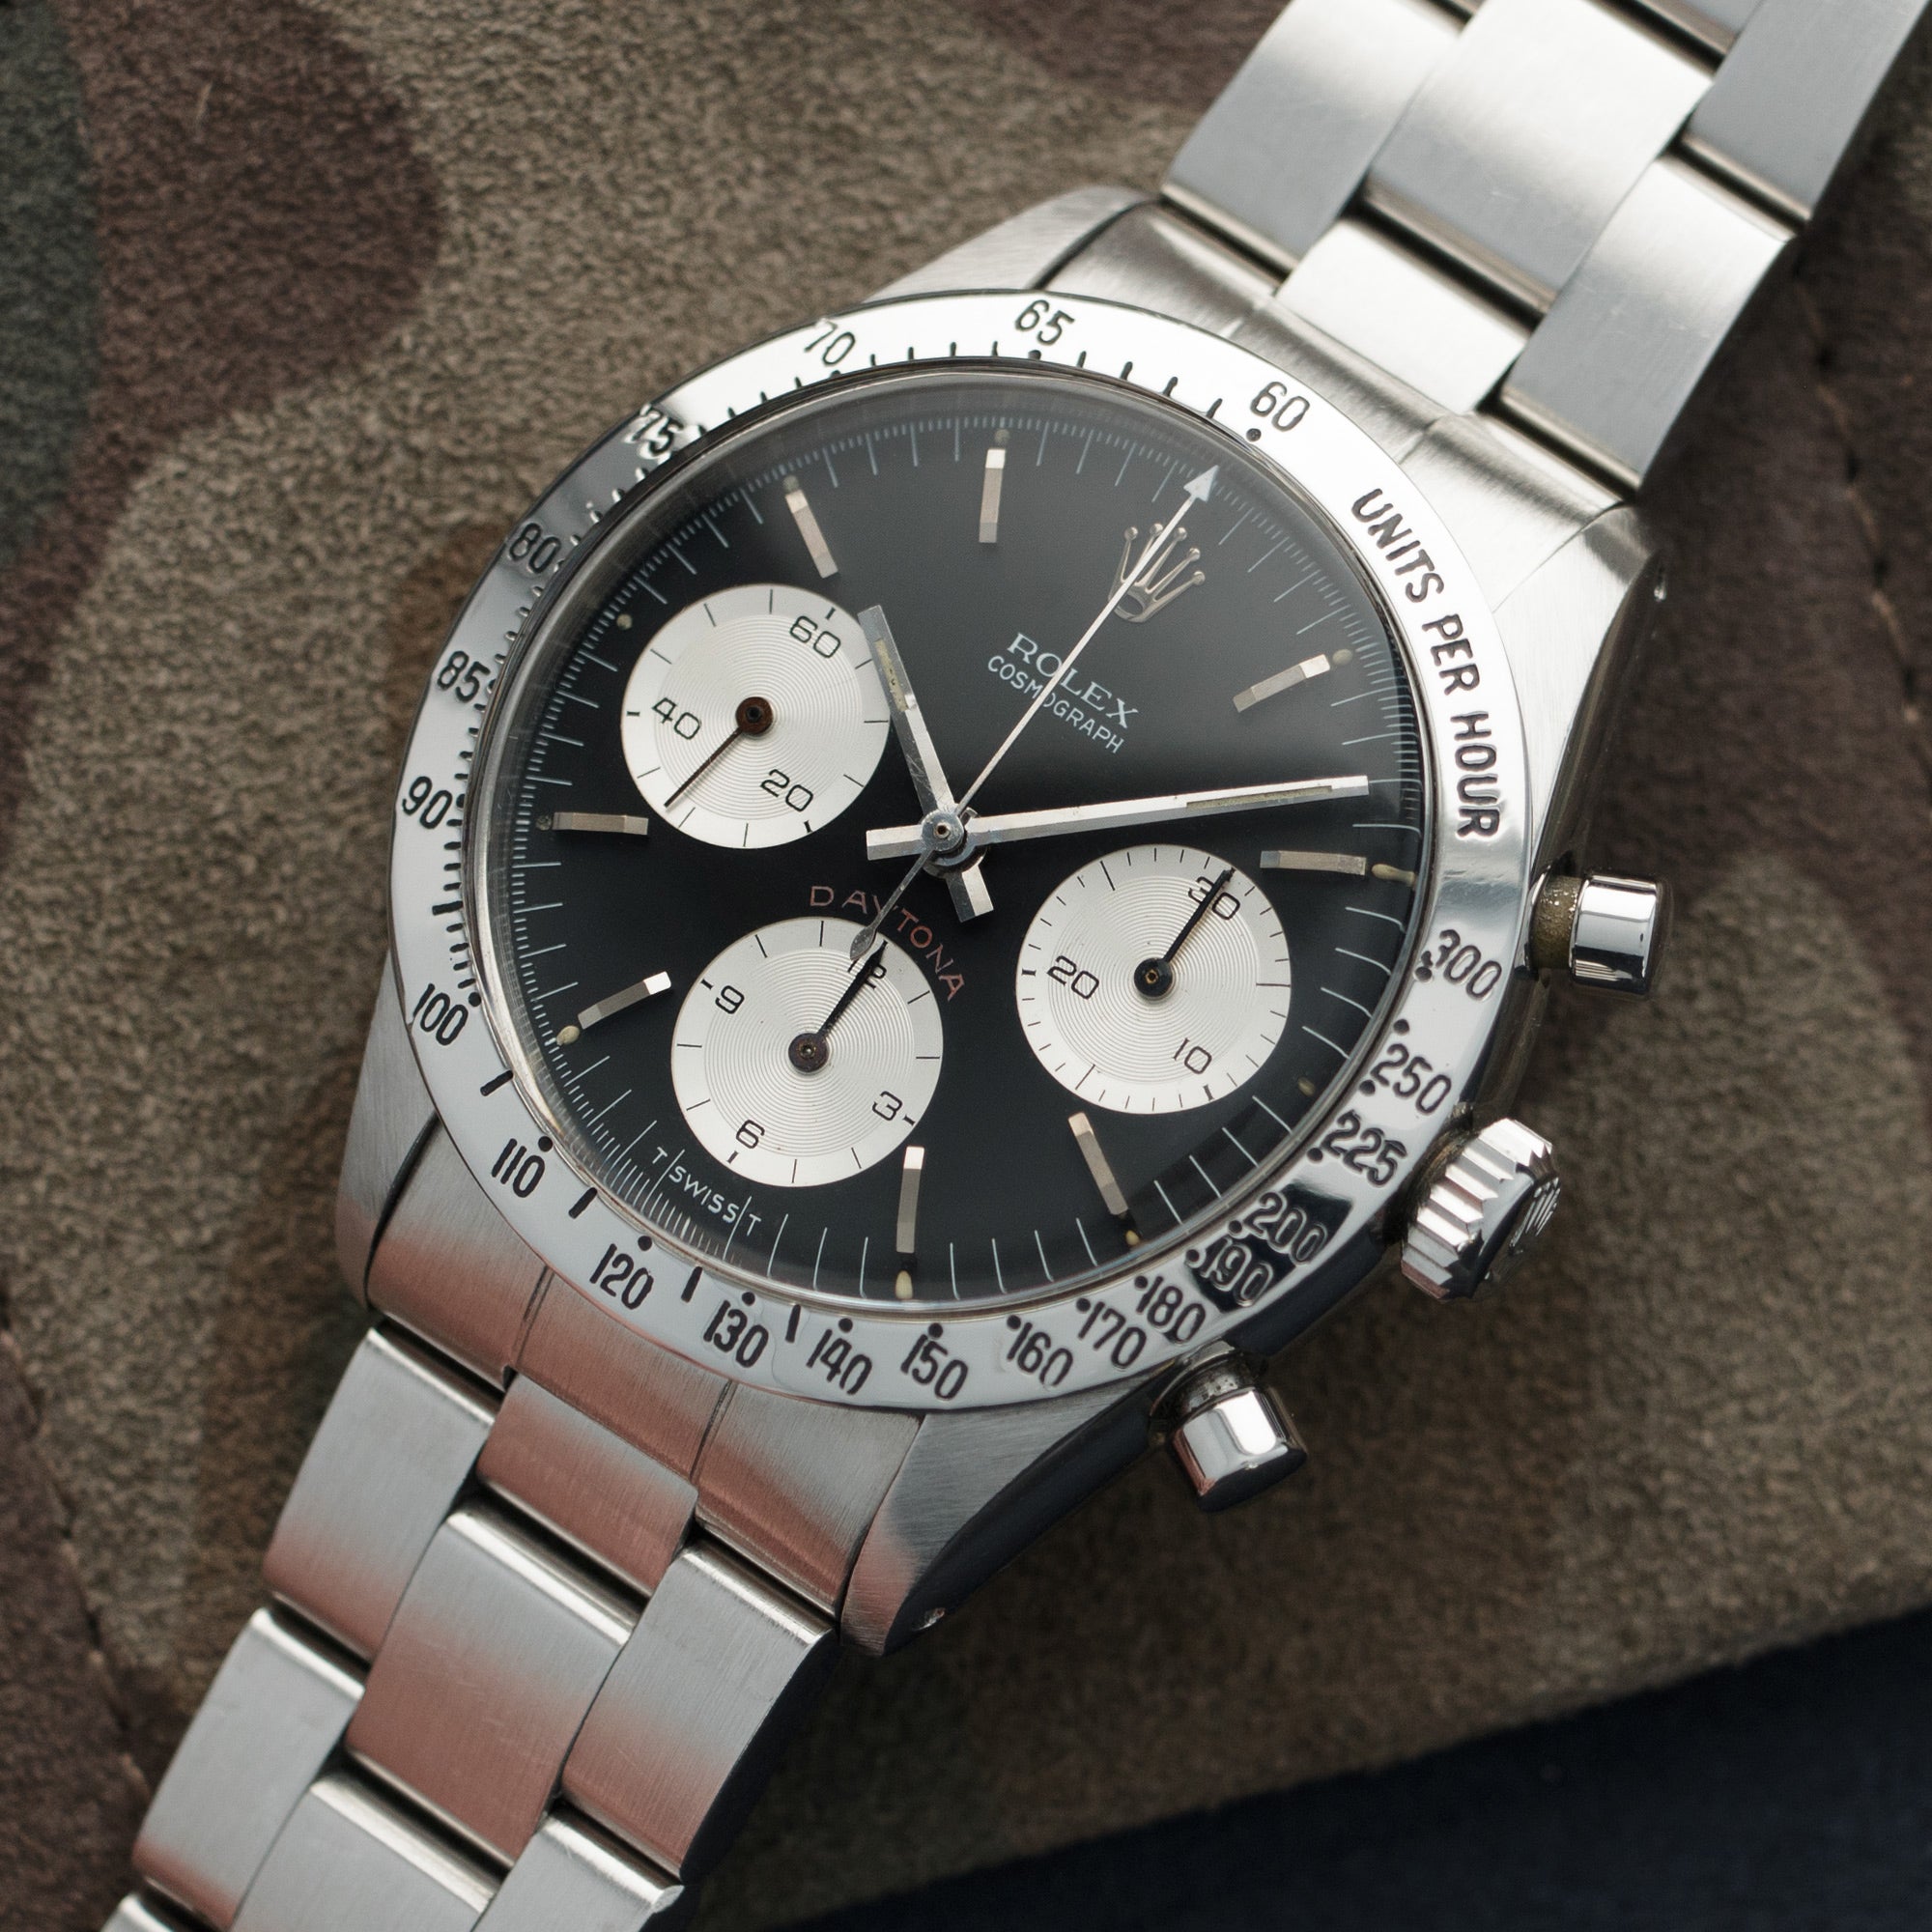 Rolex - Rolex Cosmograph Daytona Cherry Red Watch Ref. 6239 - The Keystone Watches